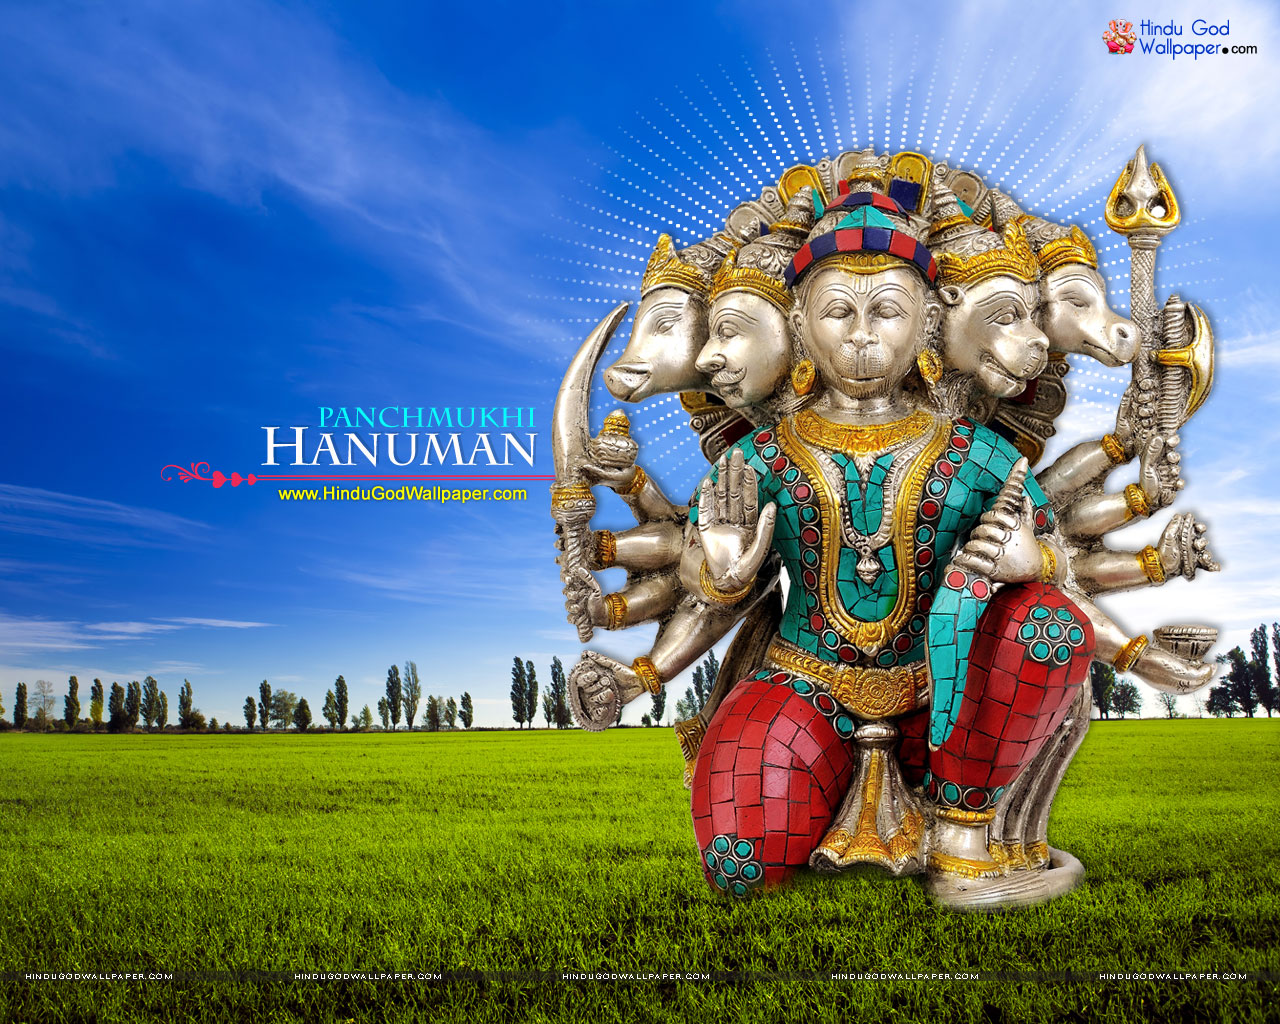 Panchmukhi Hanuman Murti Wallpapers & Photos Download